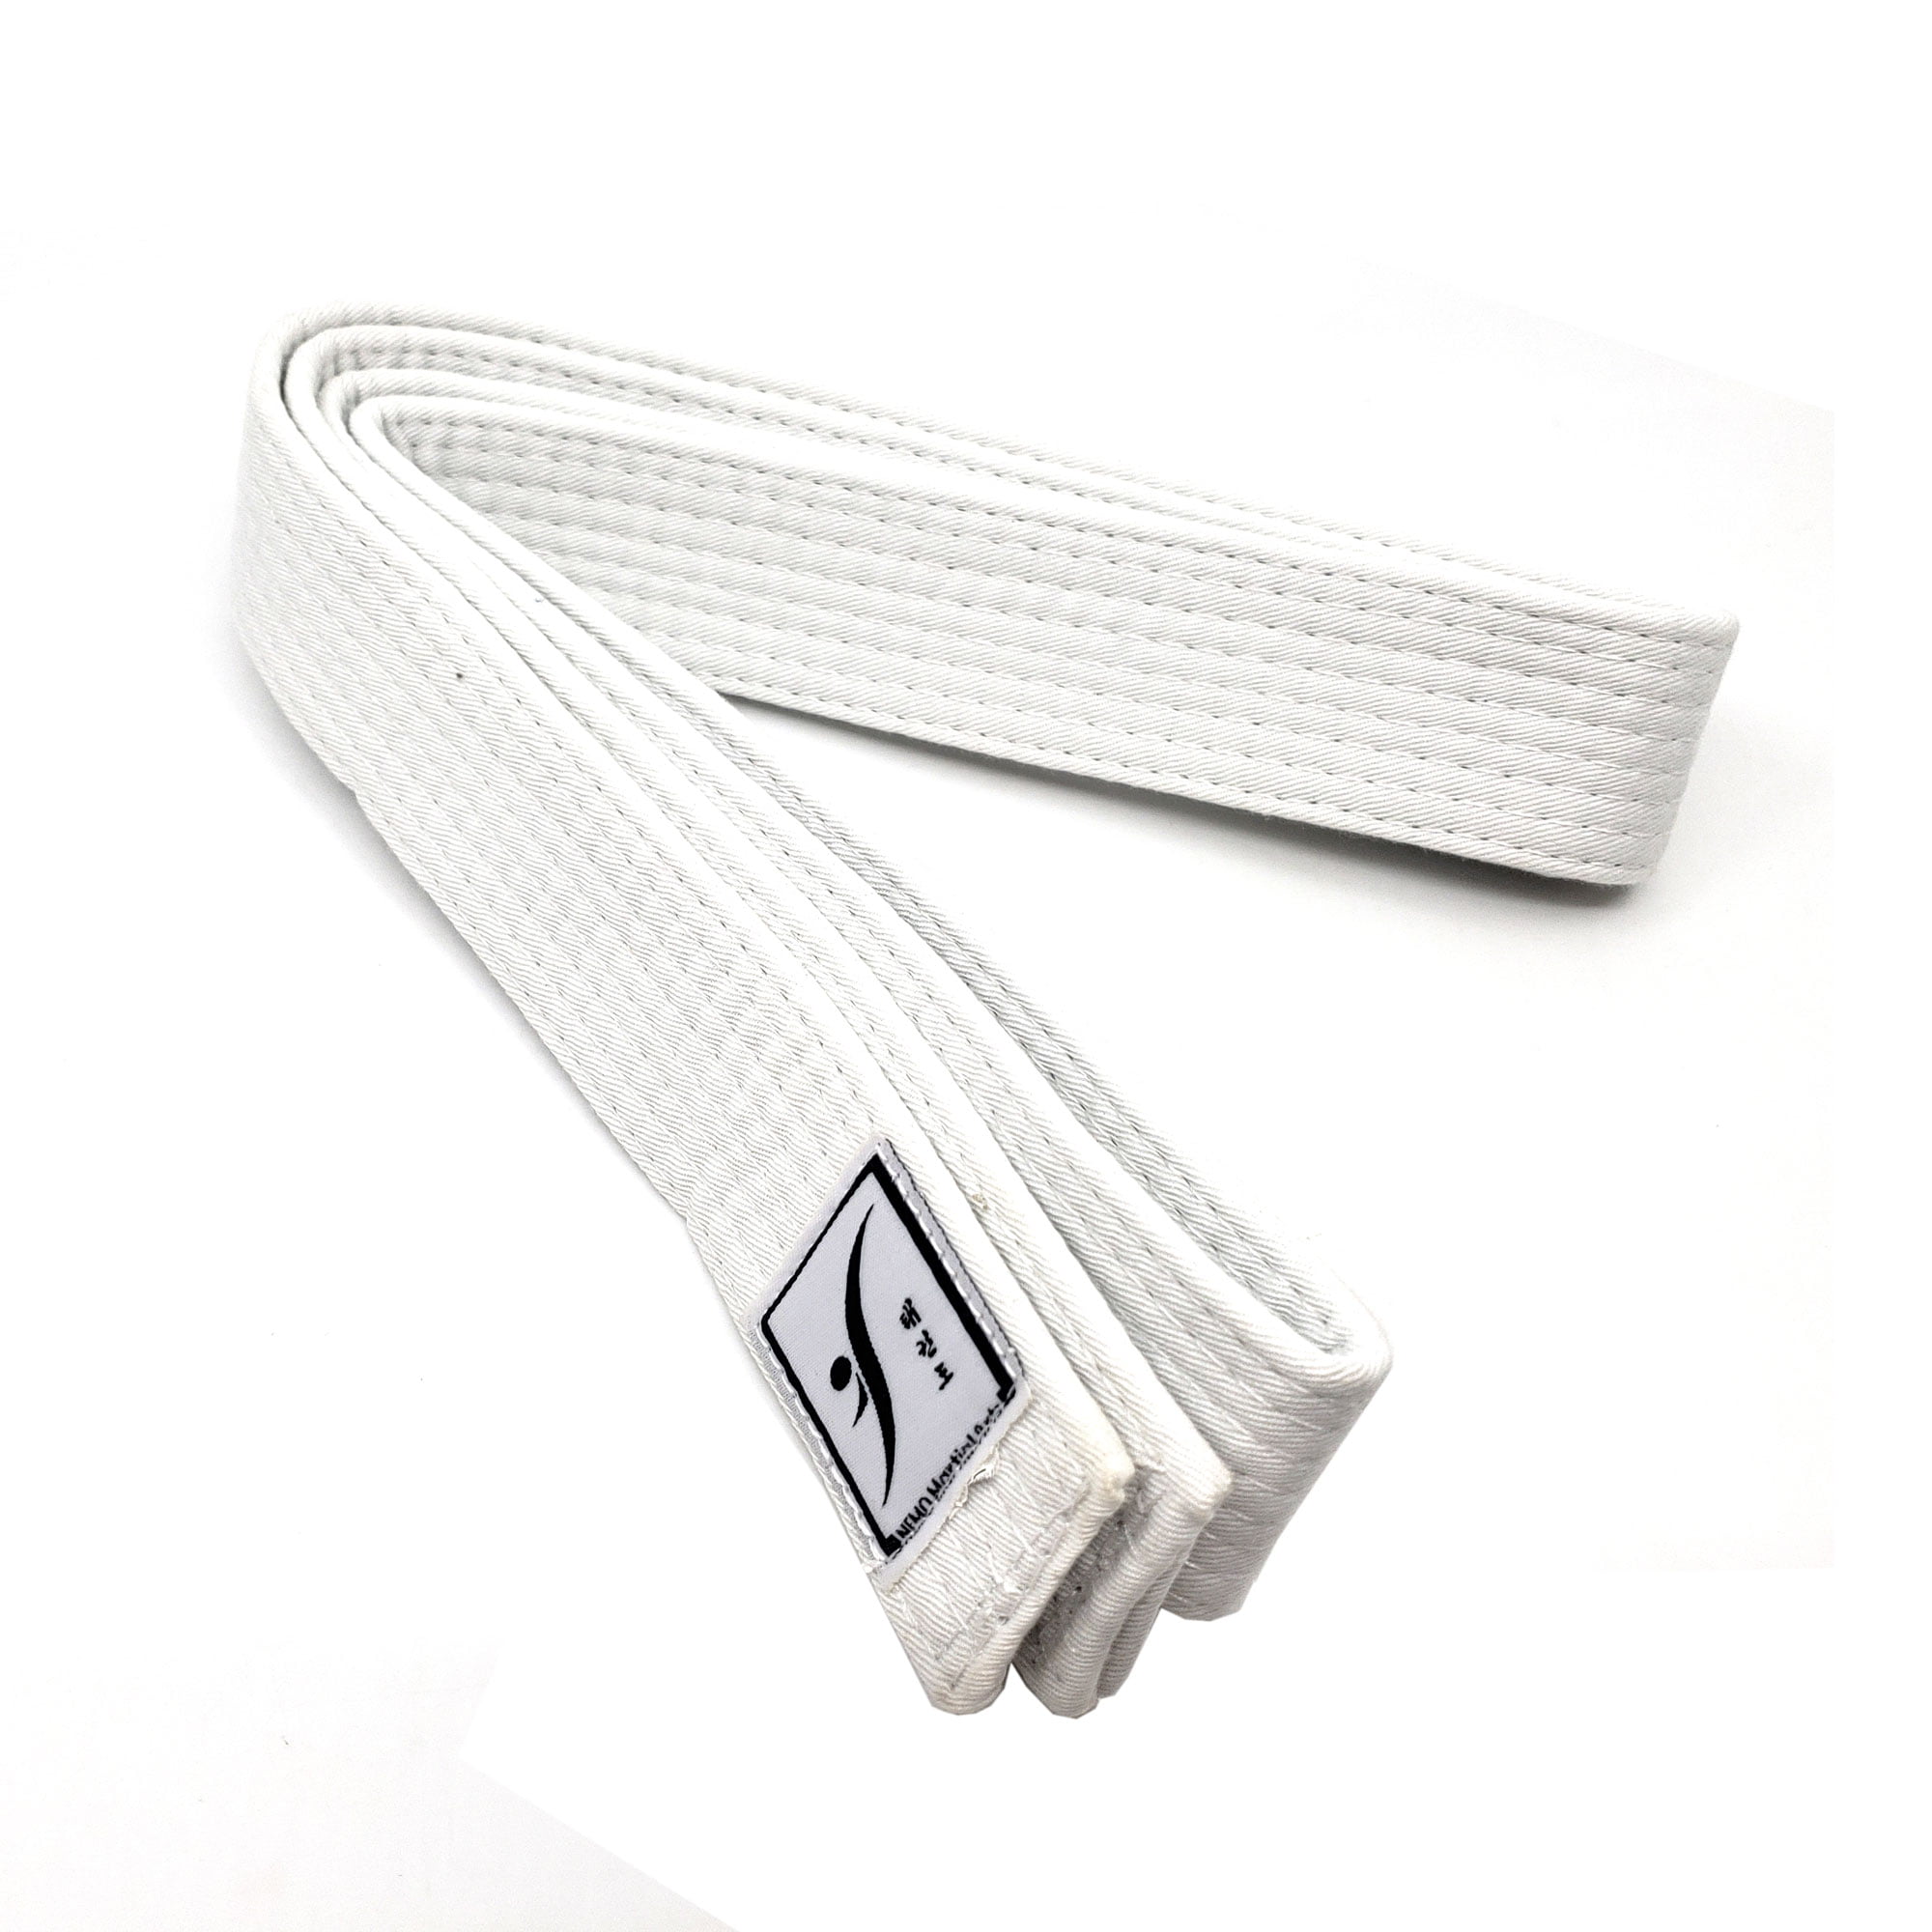 The Elixir Karate Belt Taekwondo Judo Solid Rank Karate Martial Arts Belts TKD Jujitsu BJJ Aikido Kempo Rank Belt 